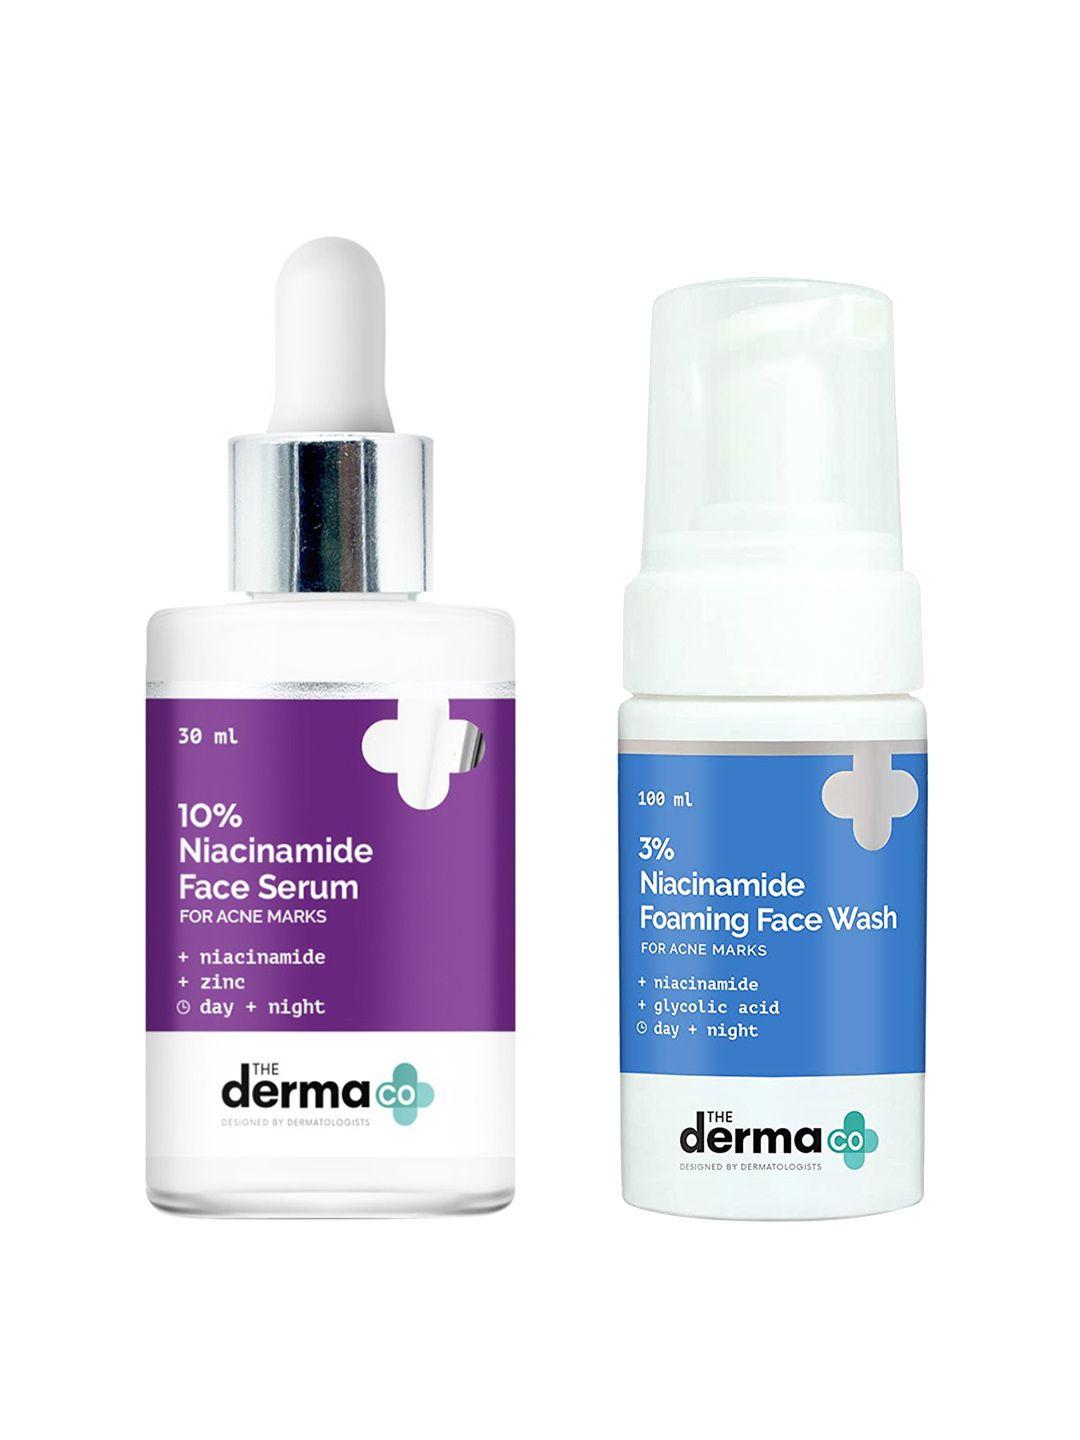 the derma co. set of 10% niacinamide serum & 3% niacinamide foaming face wash